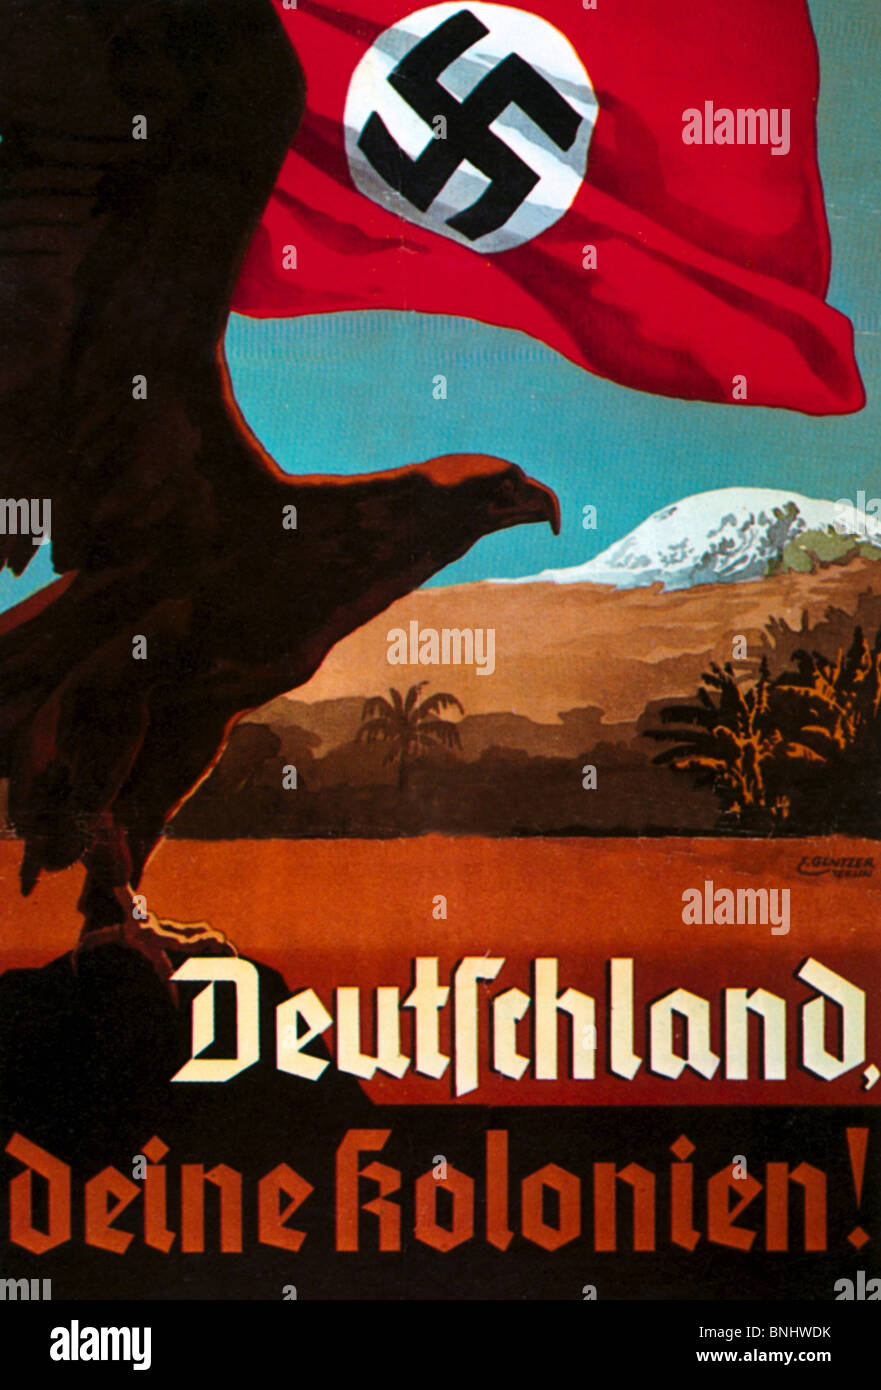 Allemagne 1935 affiche de propagande nazie nazisme colonialisme Allemagne Allemagne histoire historique historique colonie colonies eagle Banque D'Images